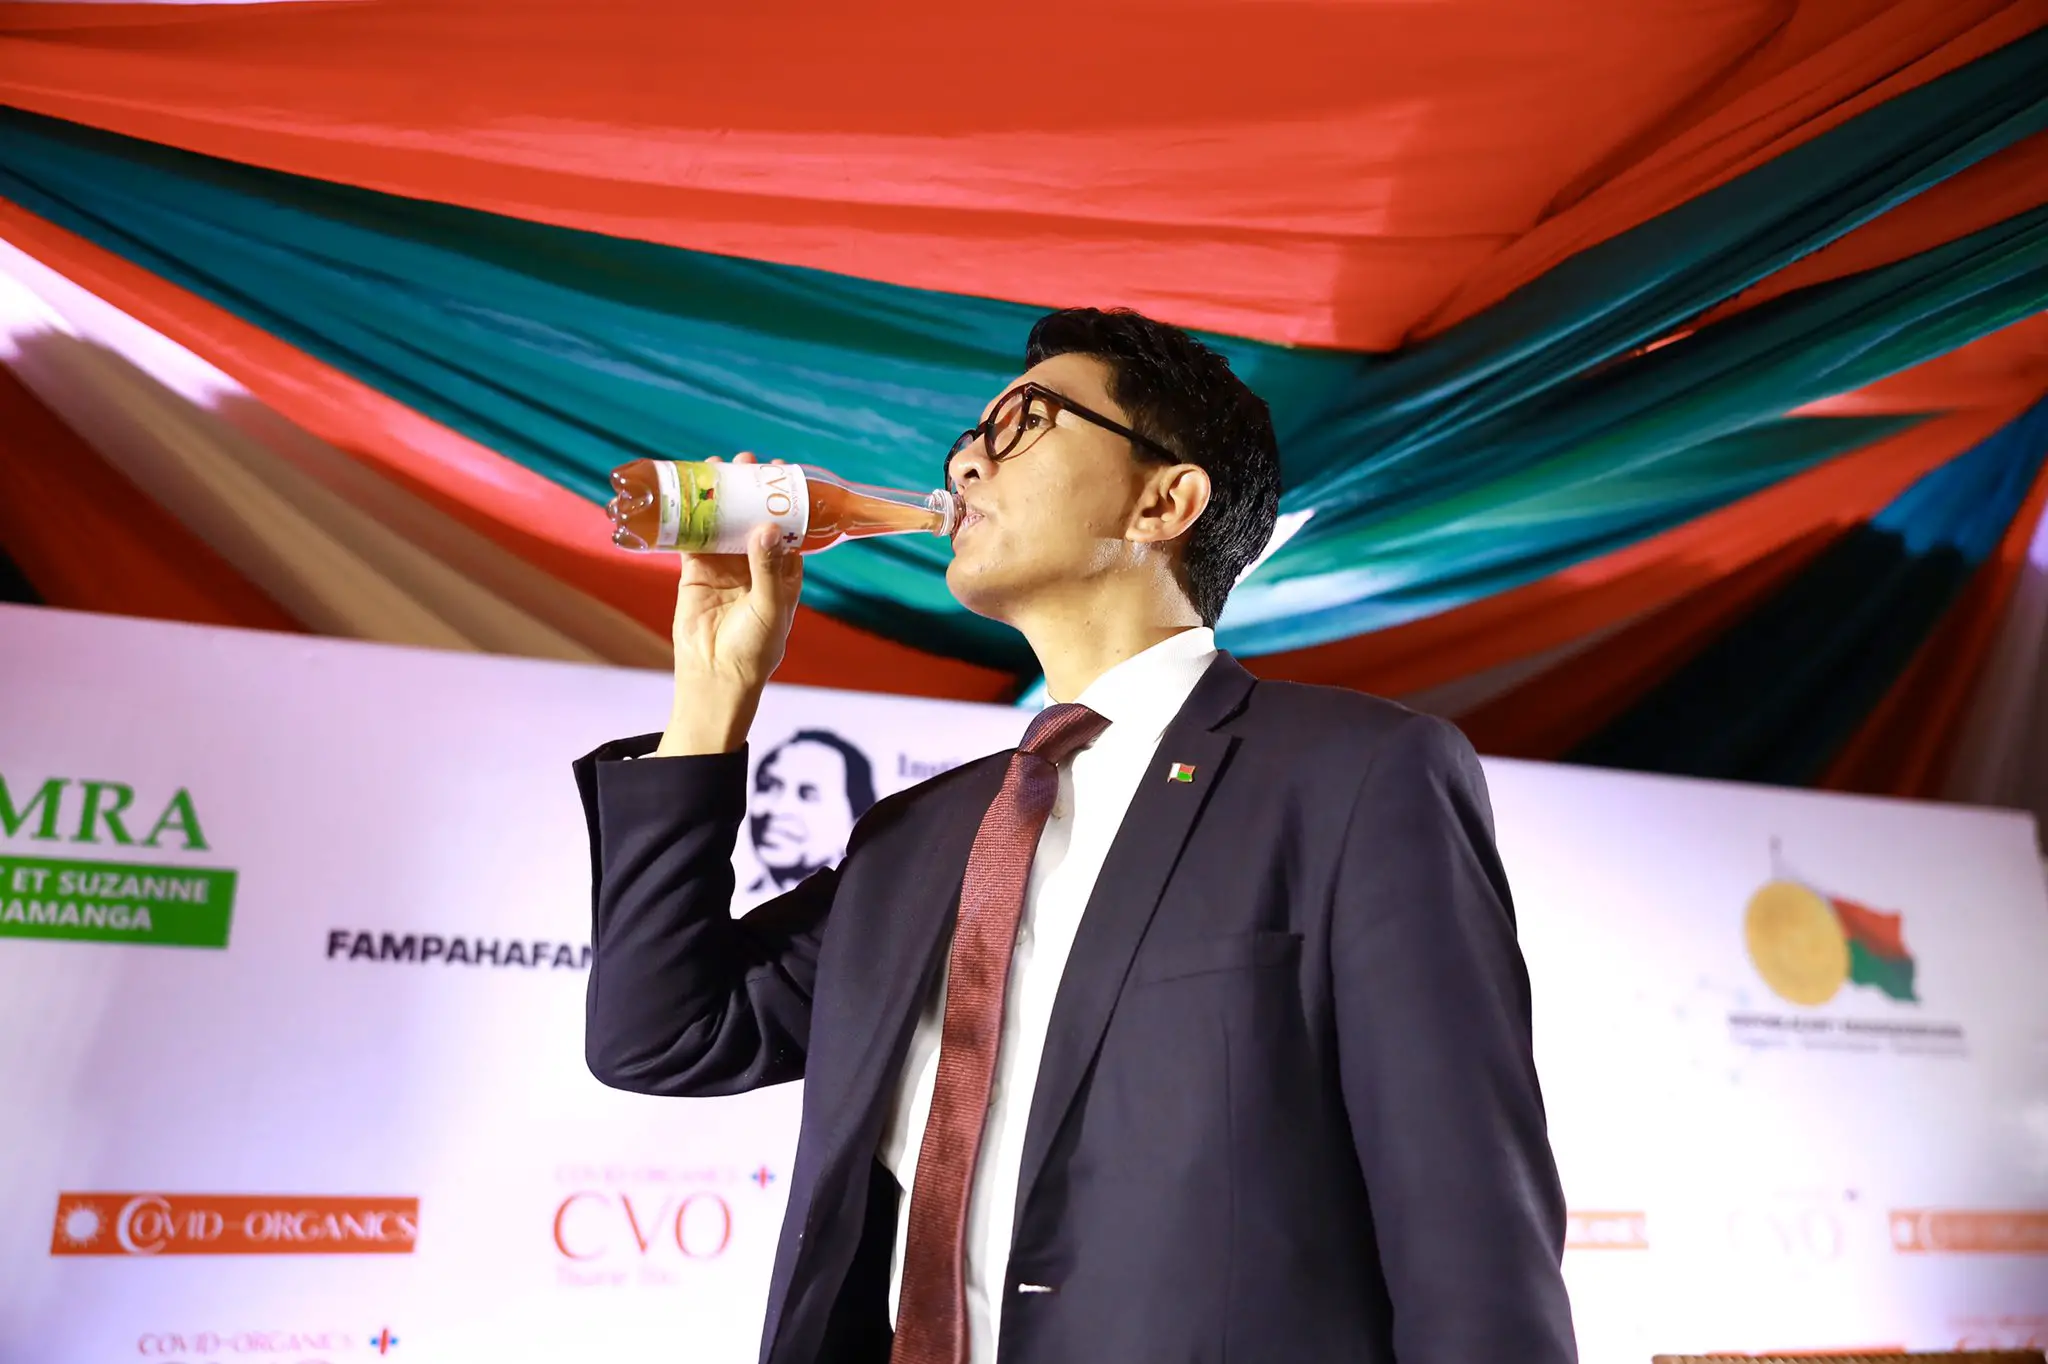 Le chef de l'État malgache, Andry Rajoelina, boit le remède contre le Covid-19. © Andry Rajoelina/Twitter